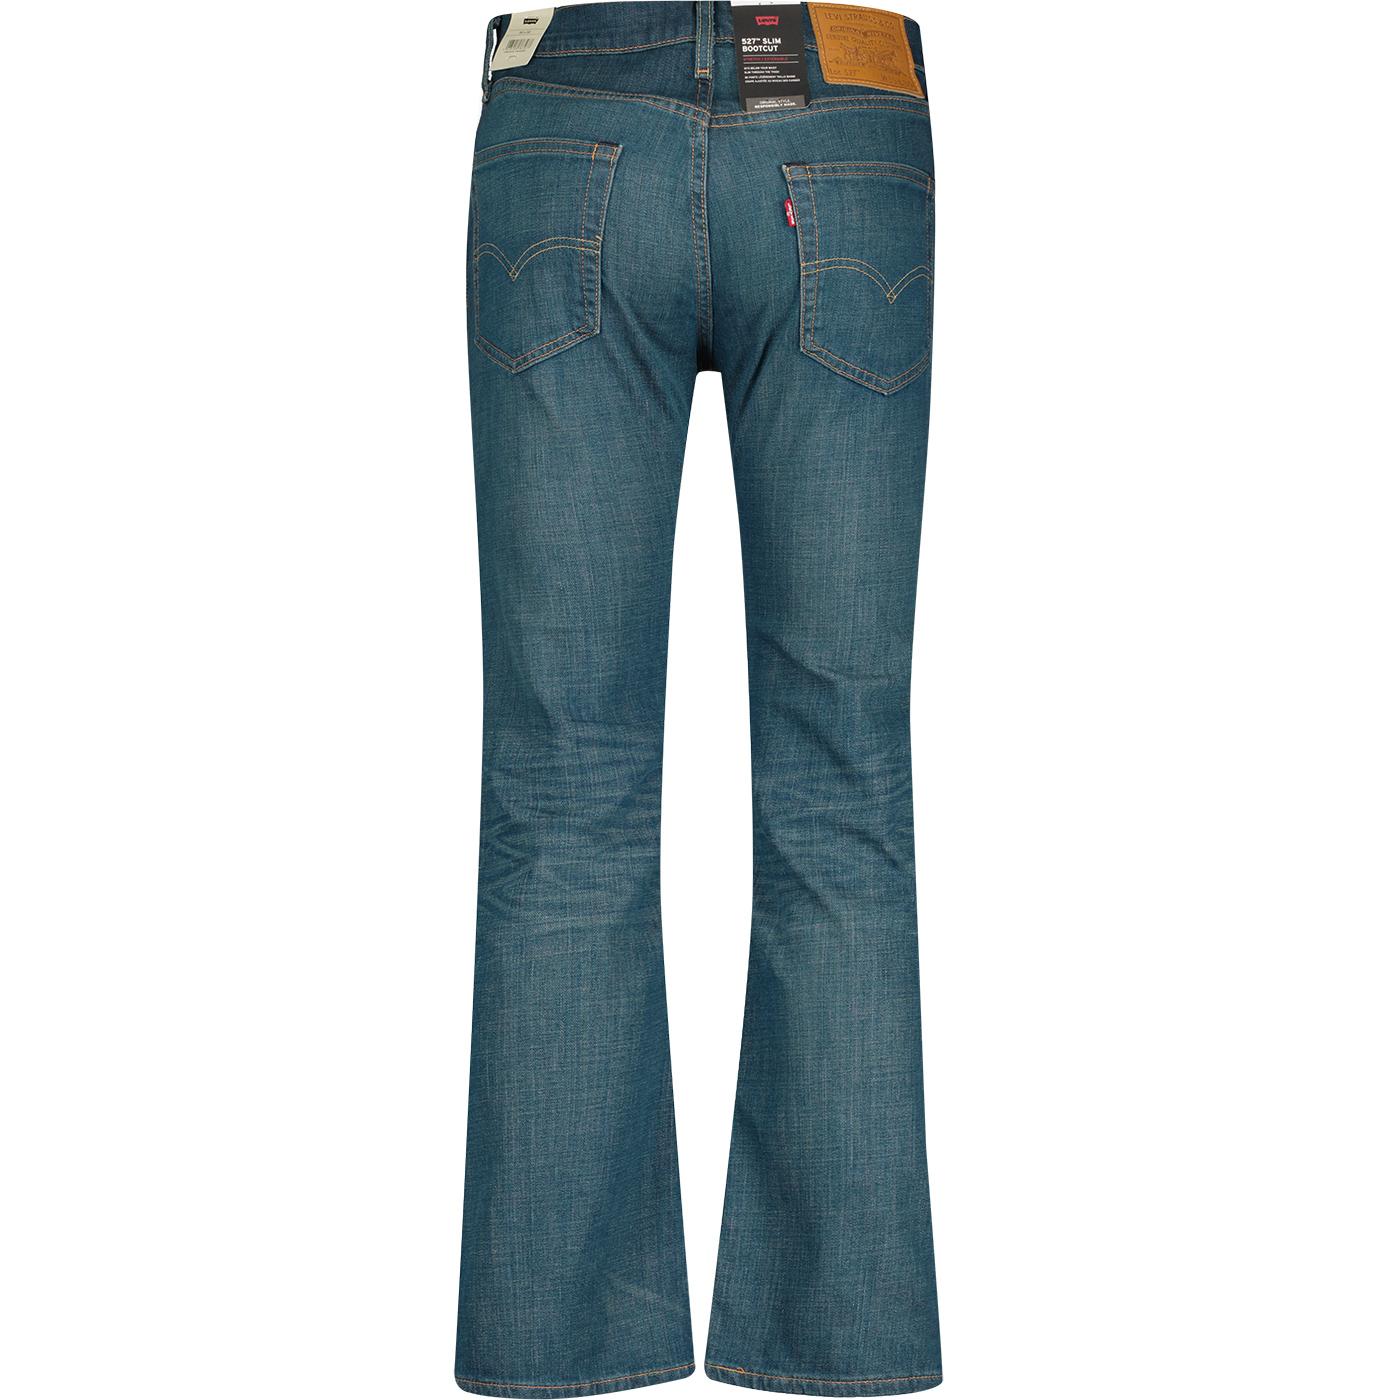 LEVI'S® 527 Slim Boot Cut Jeans in Explorer Blue